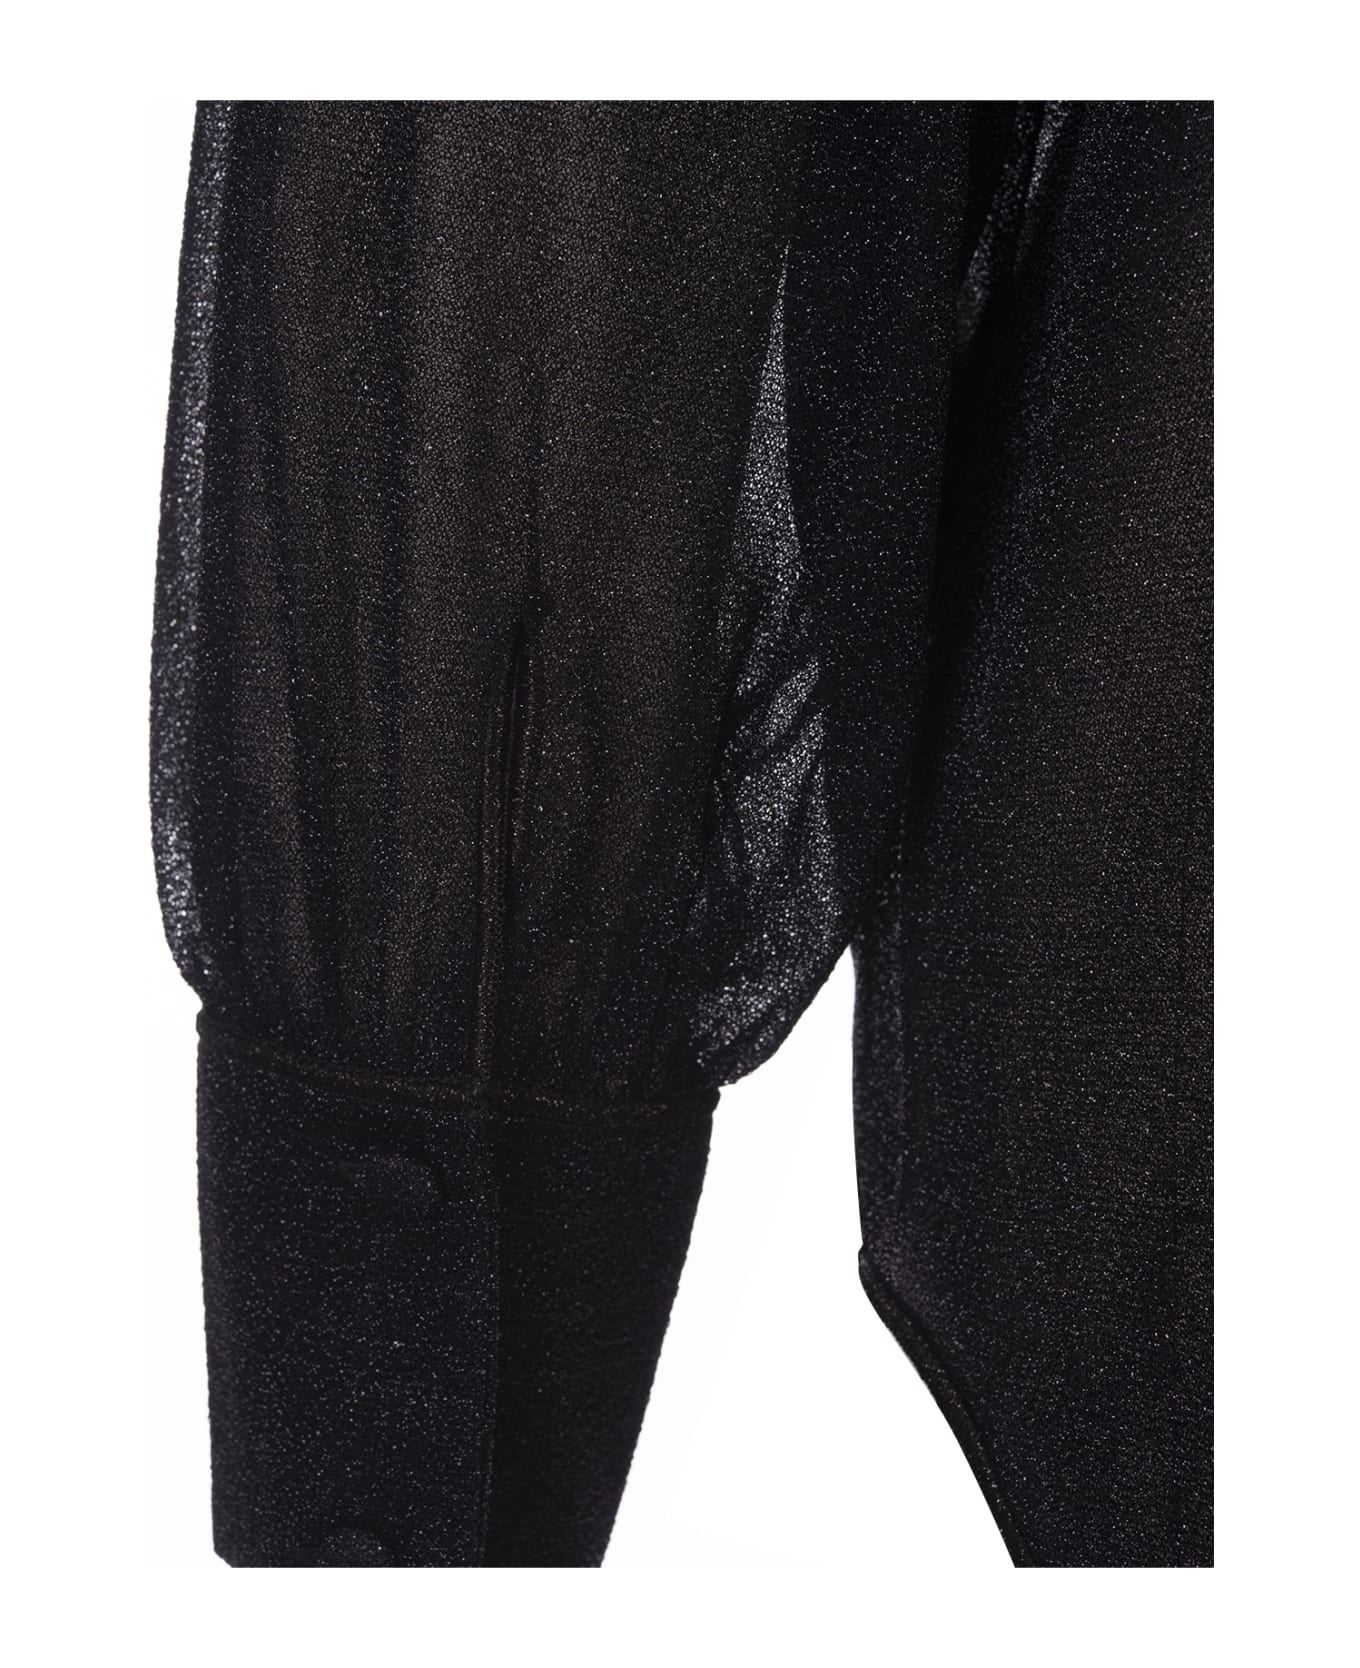 Oseree Black Lumiere Long Shirt - Black